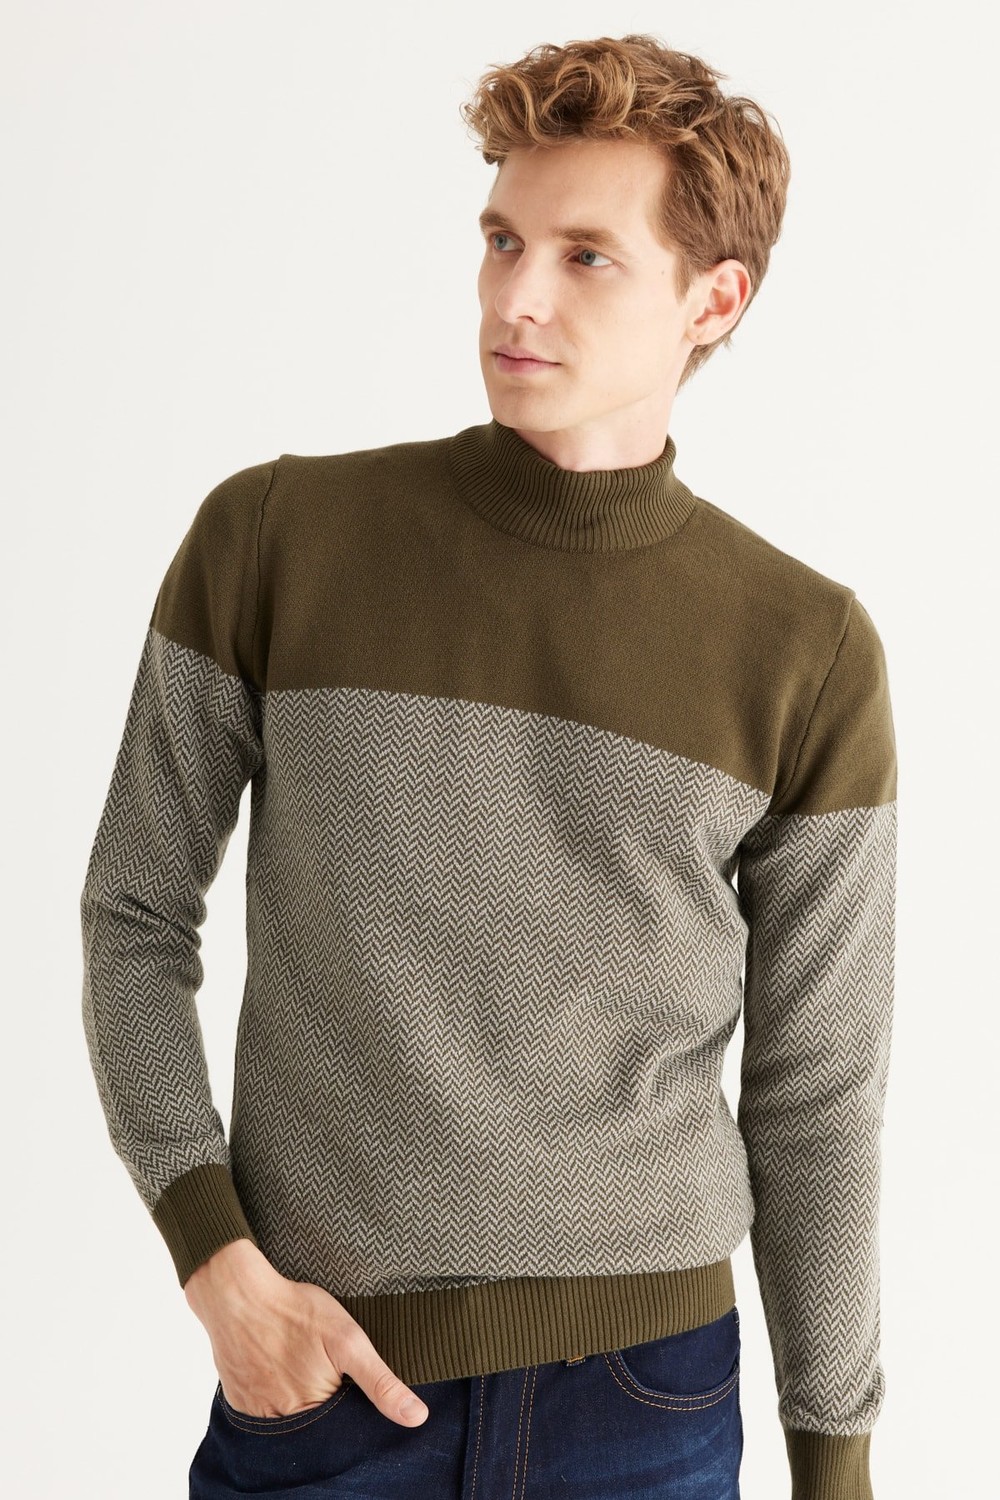 ALTINYILDIZ CLASSICS Men's Khaki-Grey Standard Fit Normal Cut, Half Turtleneck Patterned Knitwear Sweater.